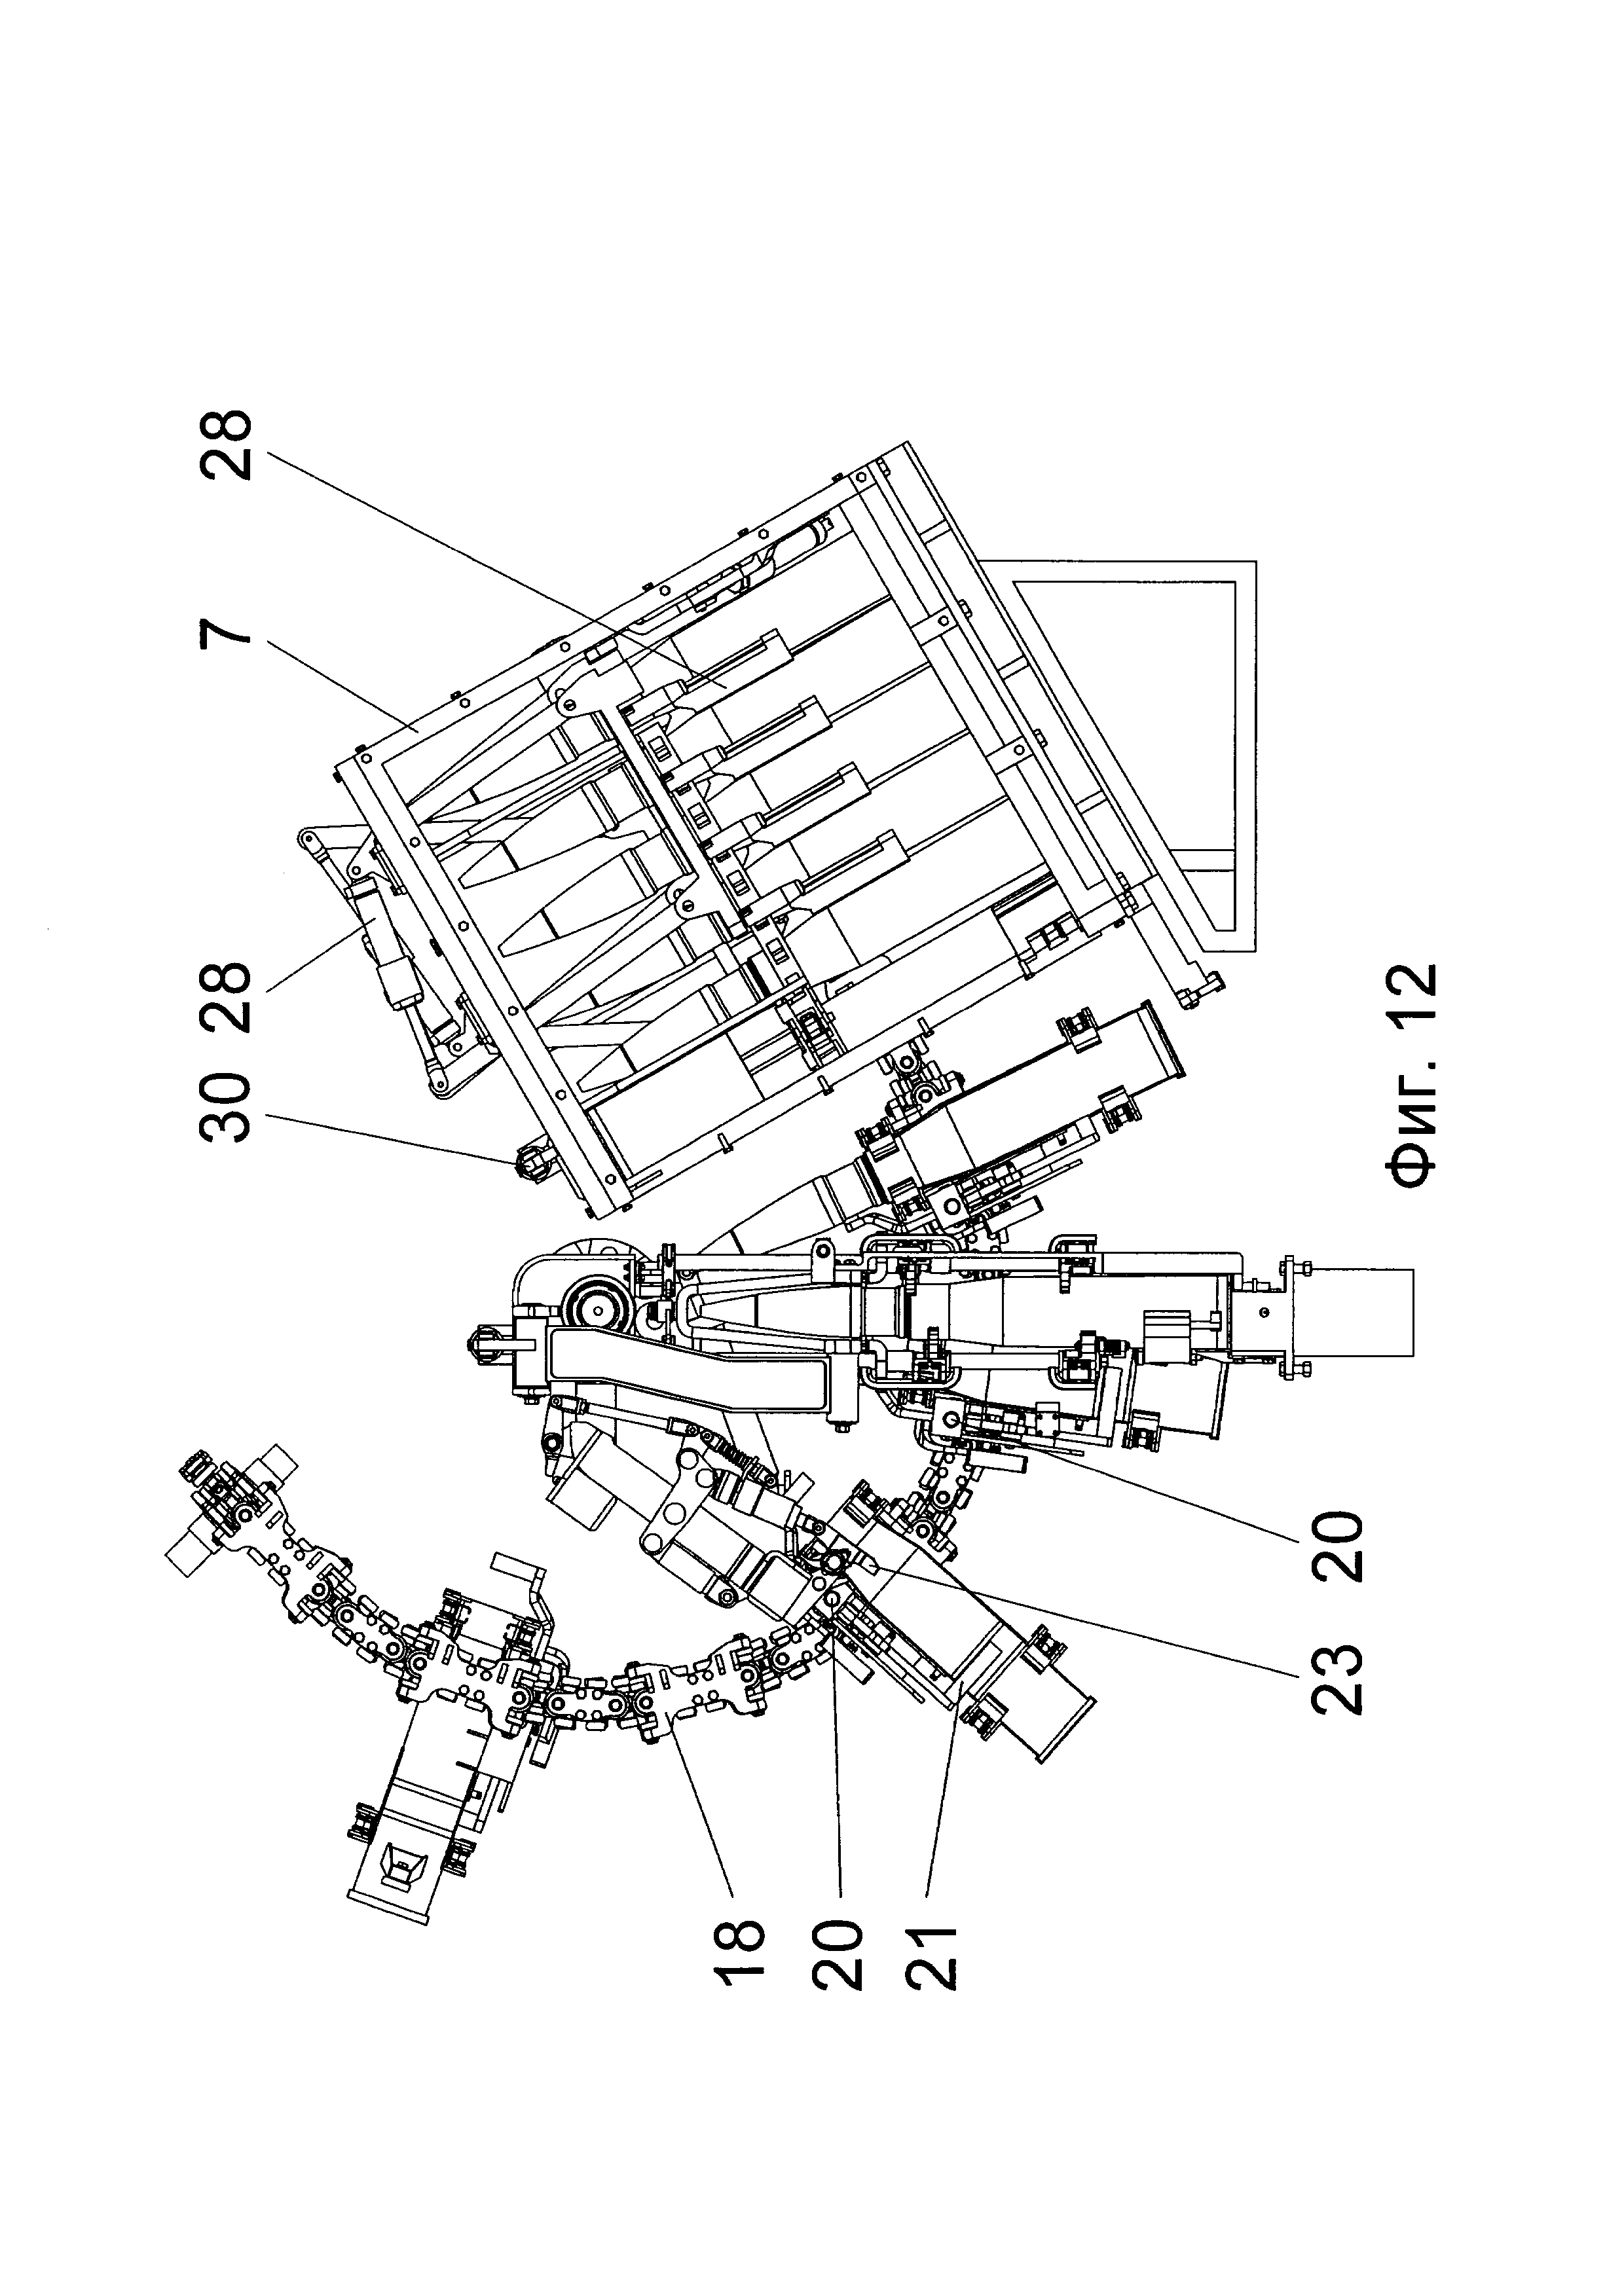 Система питания артиллерийского автомата боеприпасами